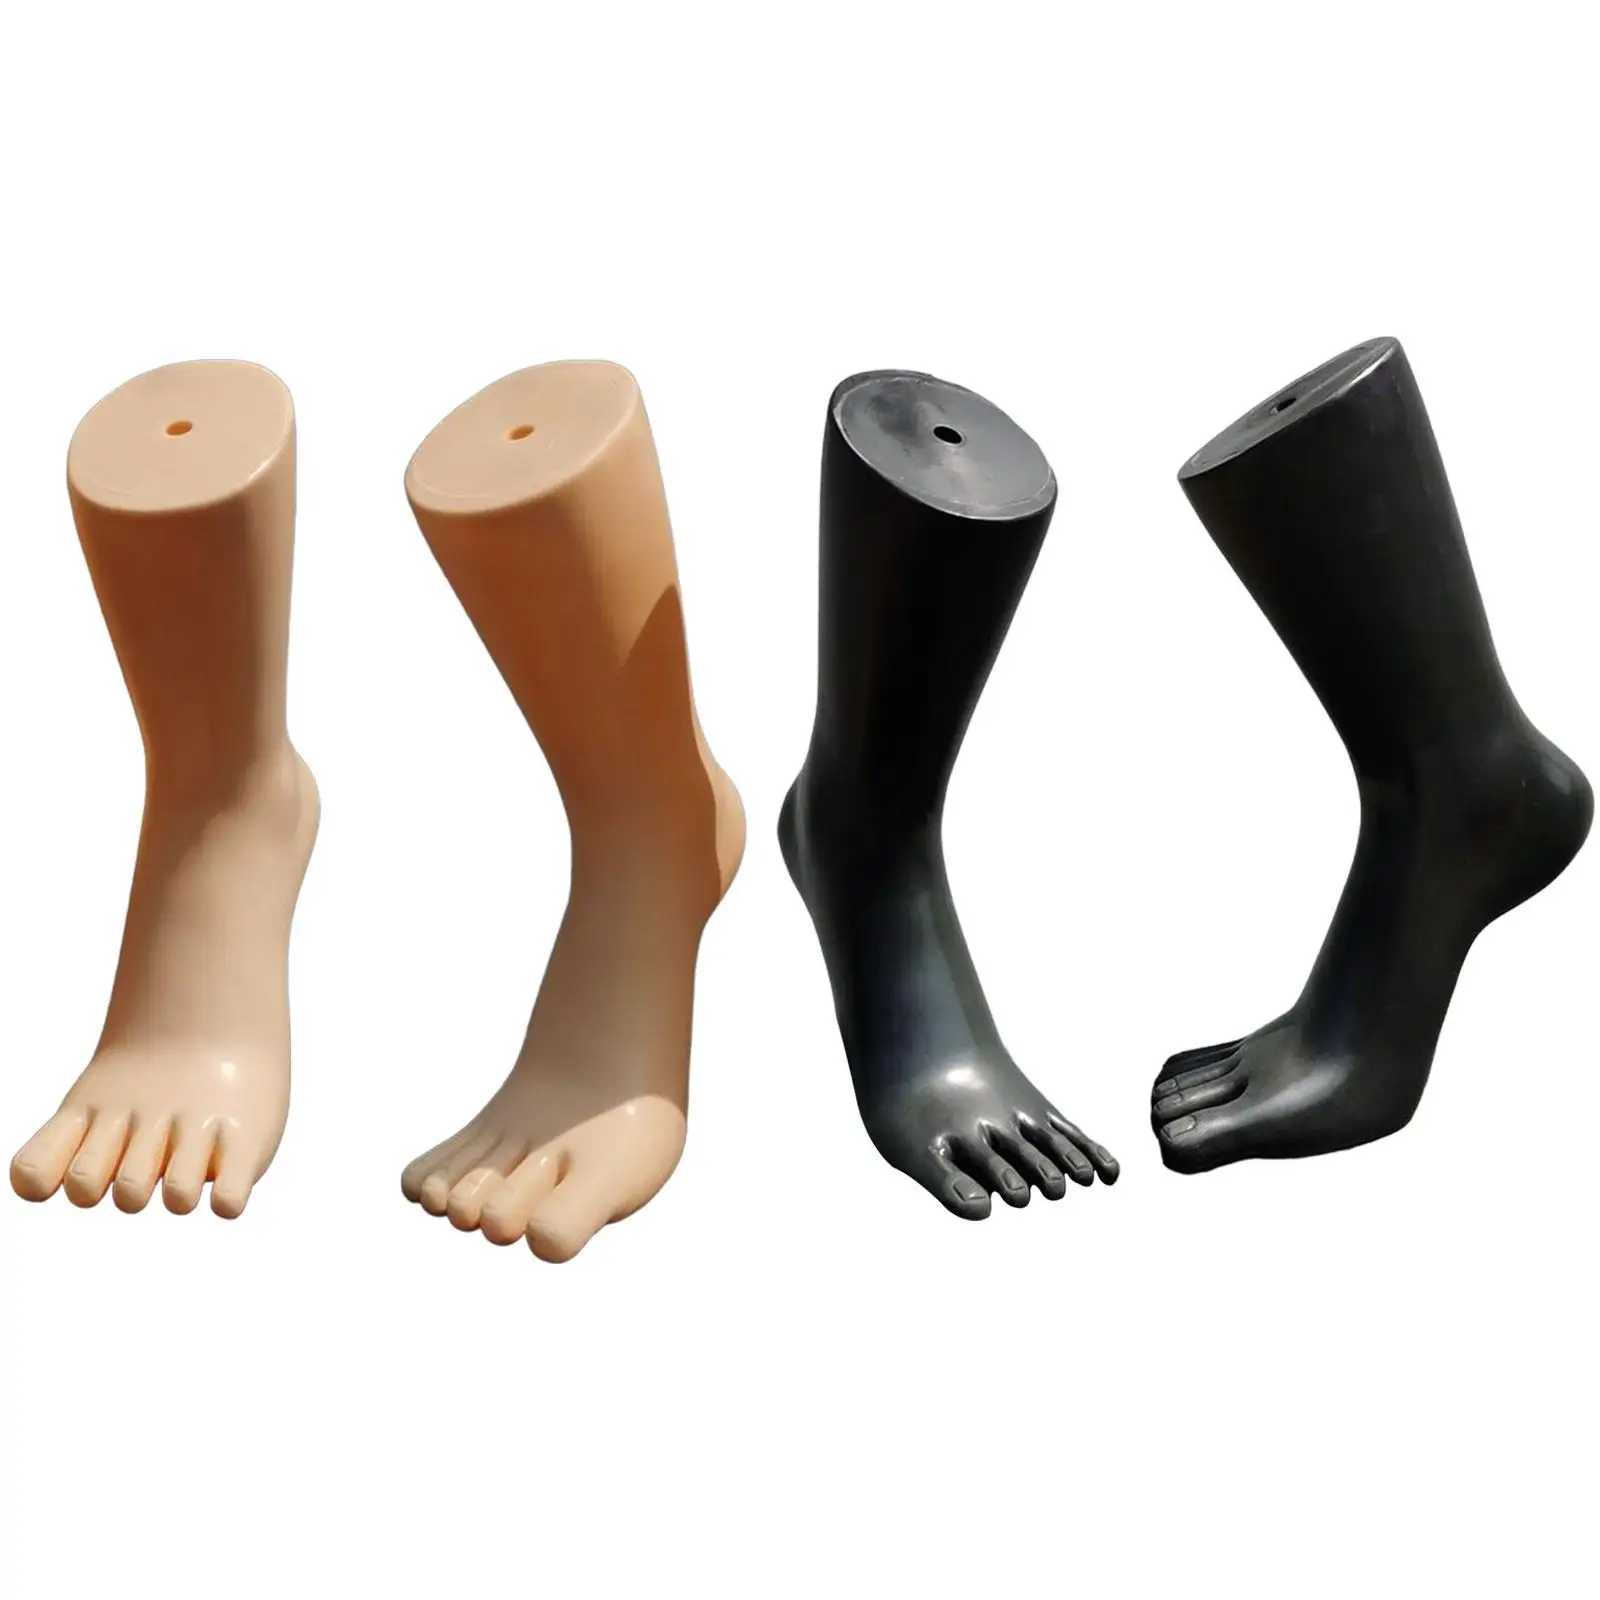 Medium Stocking Mannequin Shoes Displays Model Toe Separate Shoes Display Props Mannequin Foot for Retail Ankle Bracelet Socks